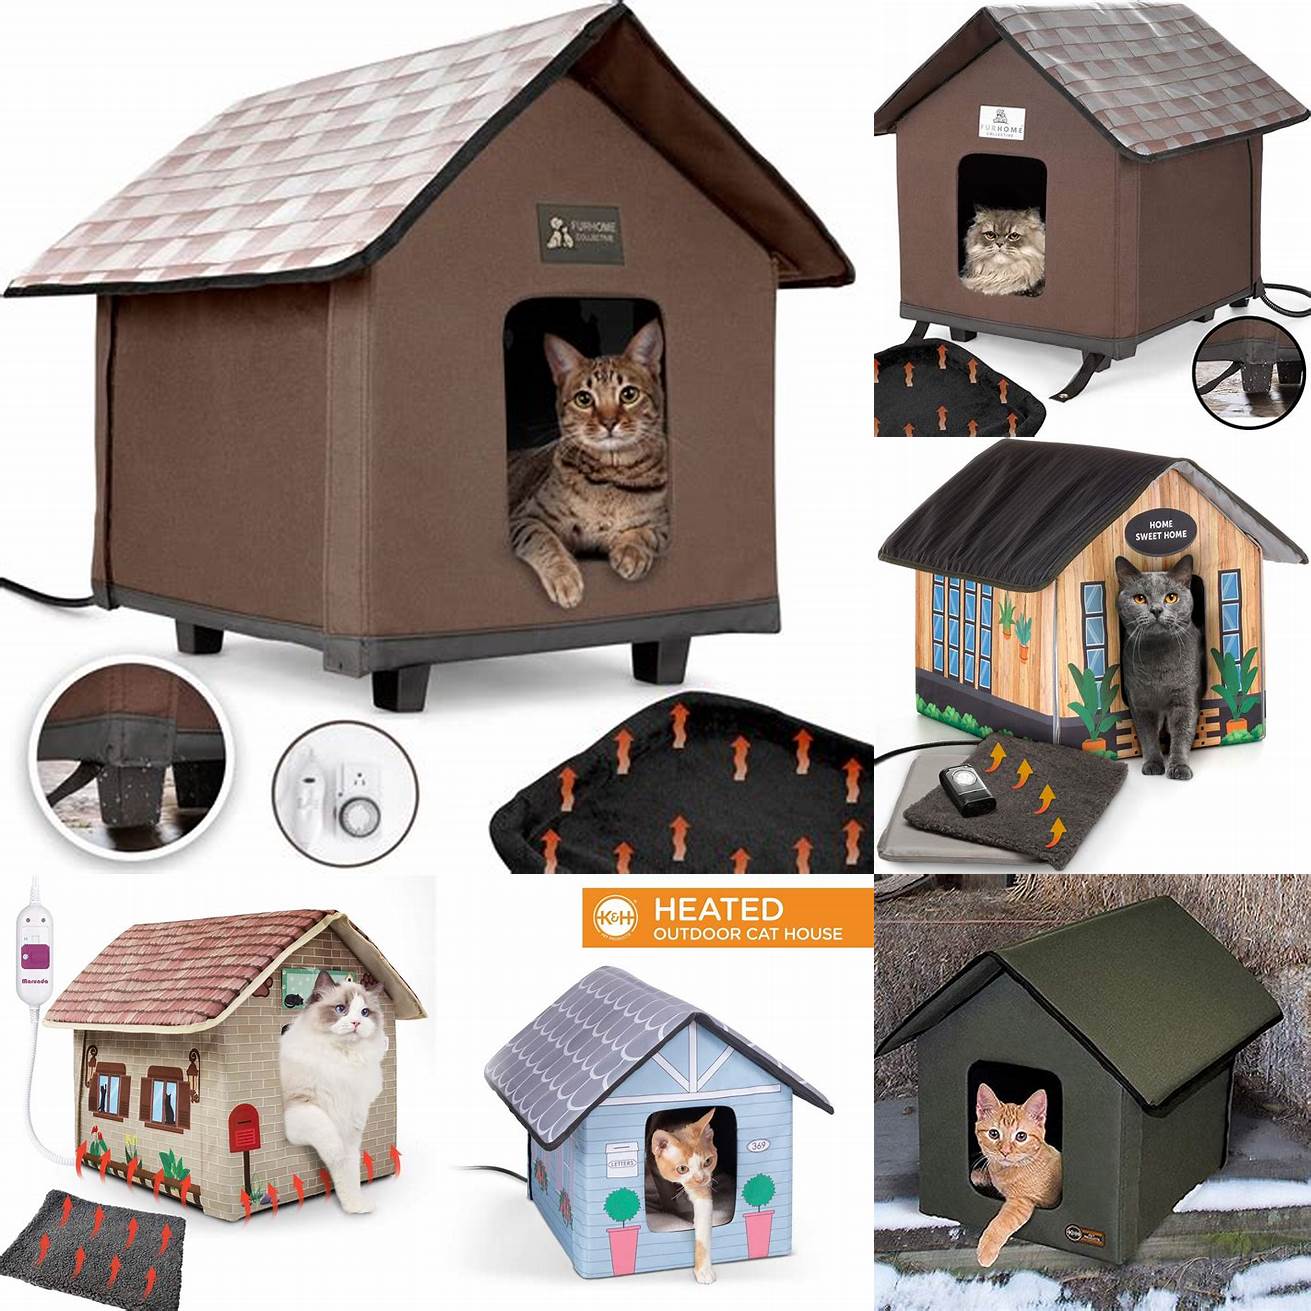 3 Heated Cat Houses